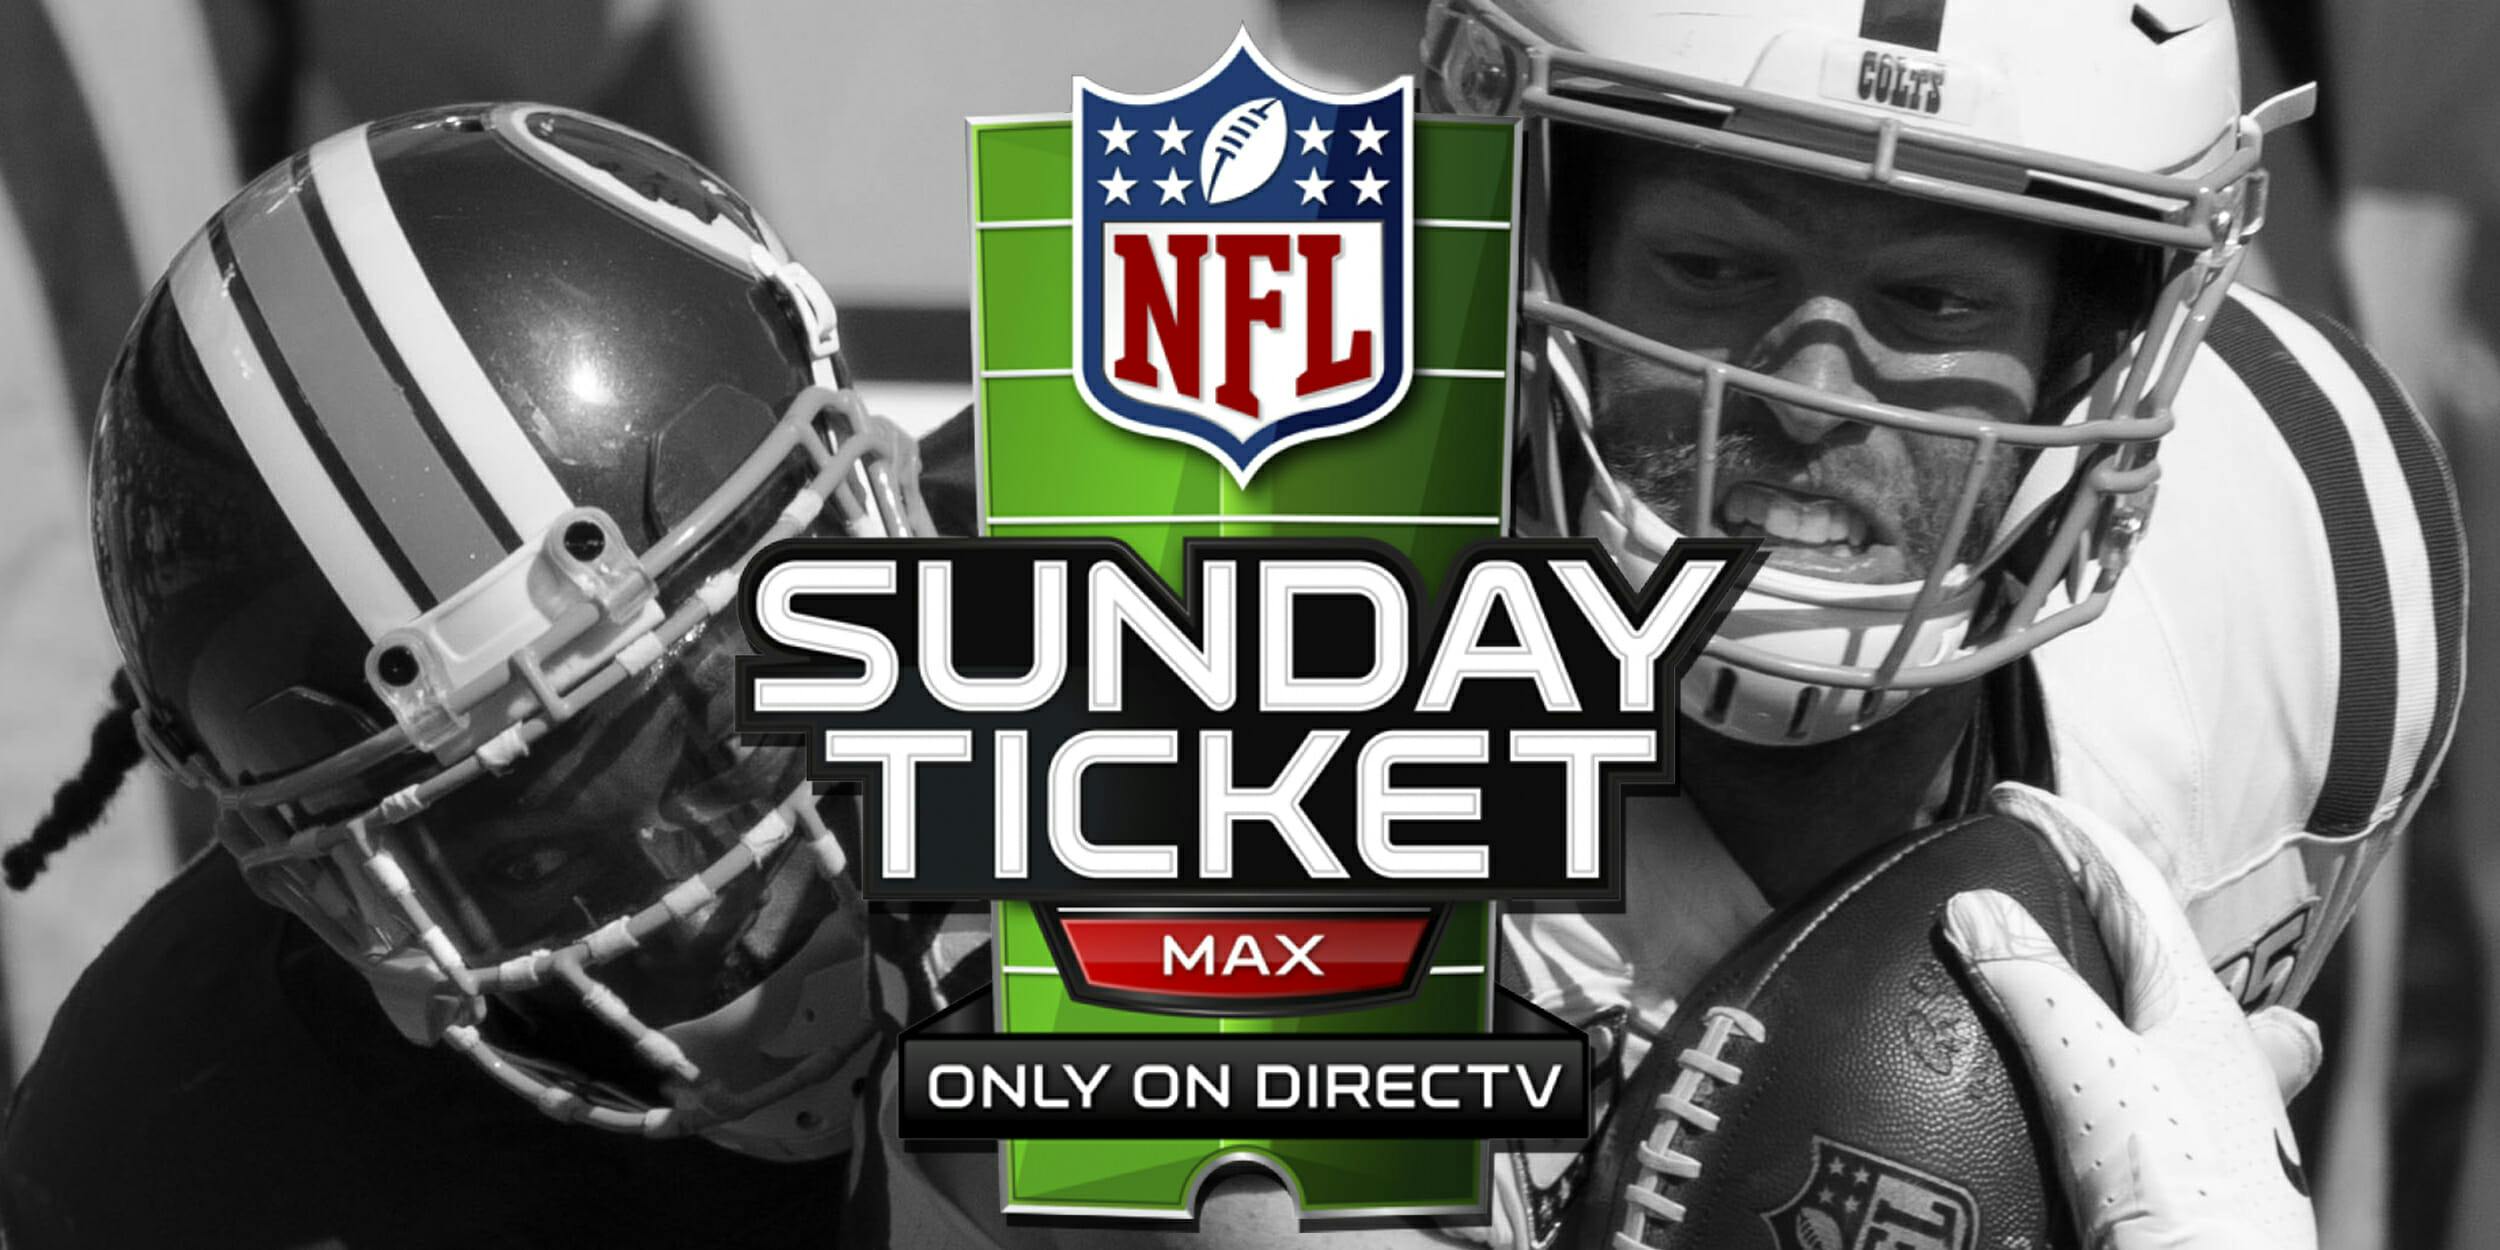 directv nfl sunday ticket max channels